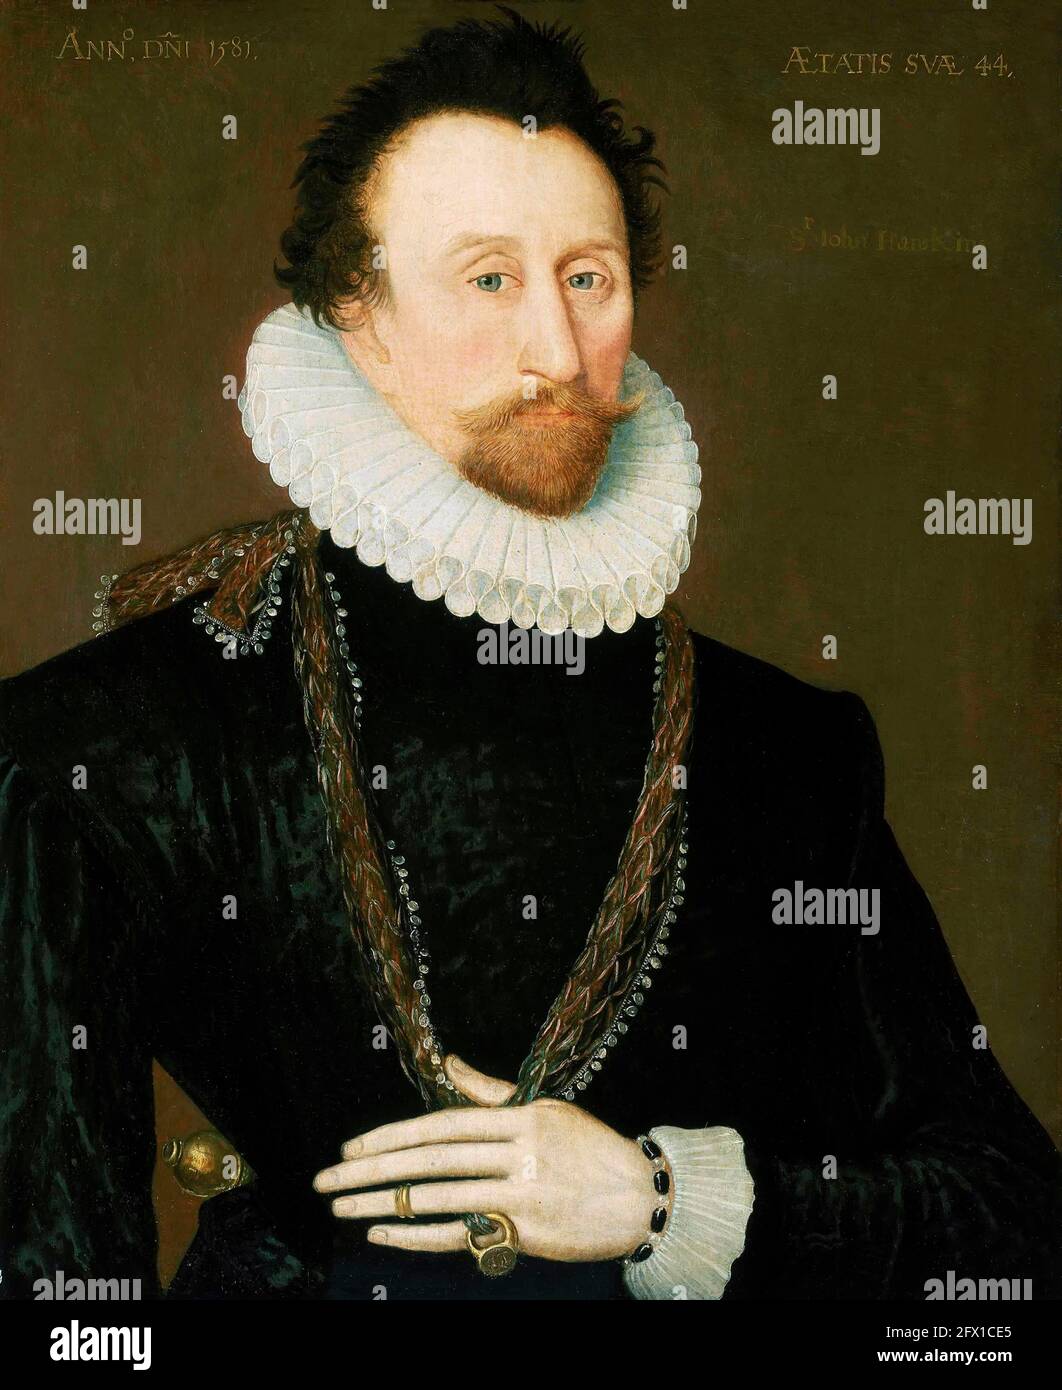 Portrait de John Hawkins, 1581 Banque D'Images